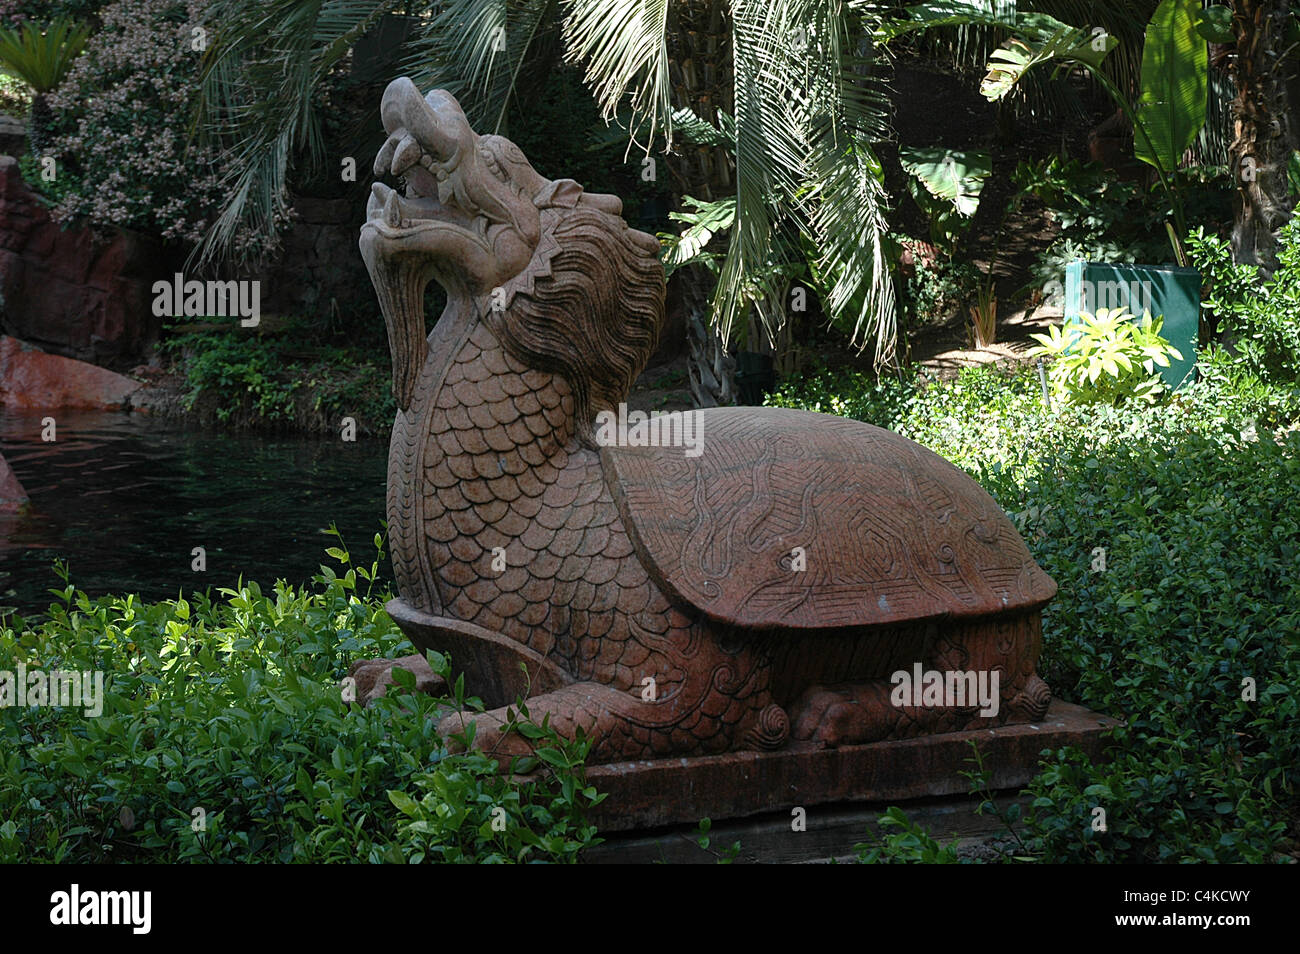 A Chinese Dragon Turtle Garden Statue Decorates The Gardens Near